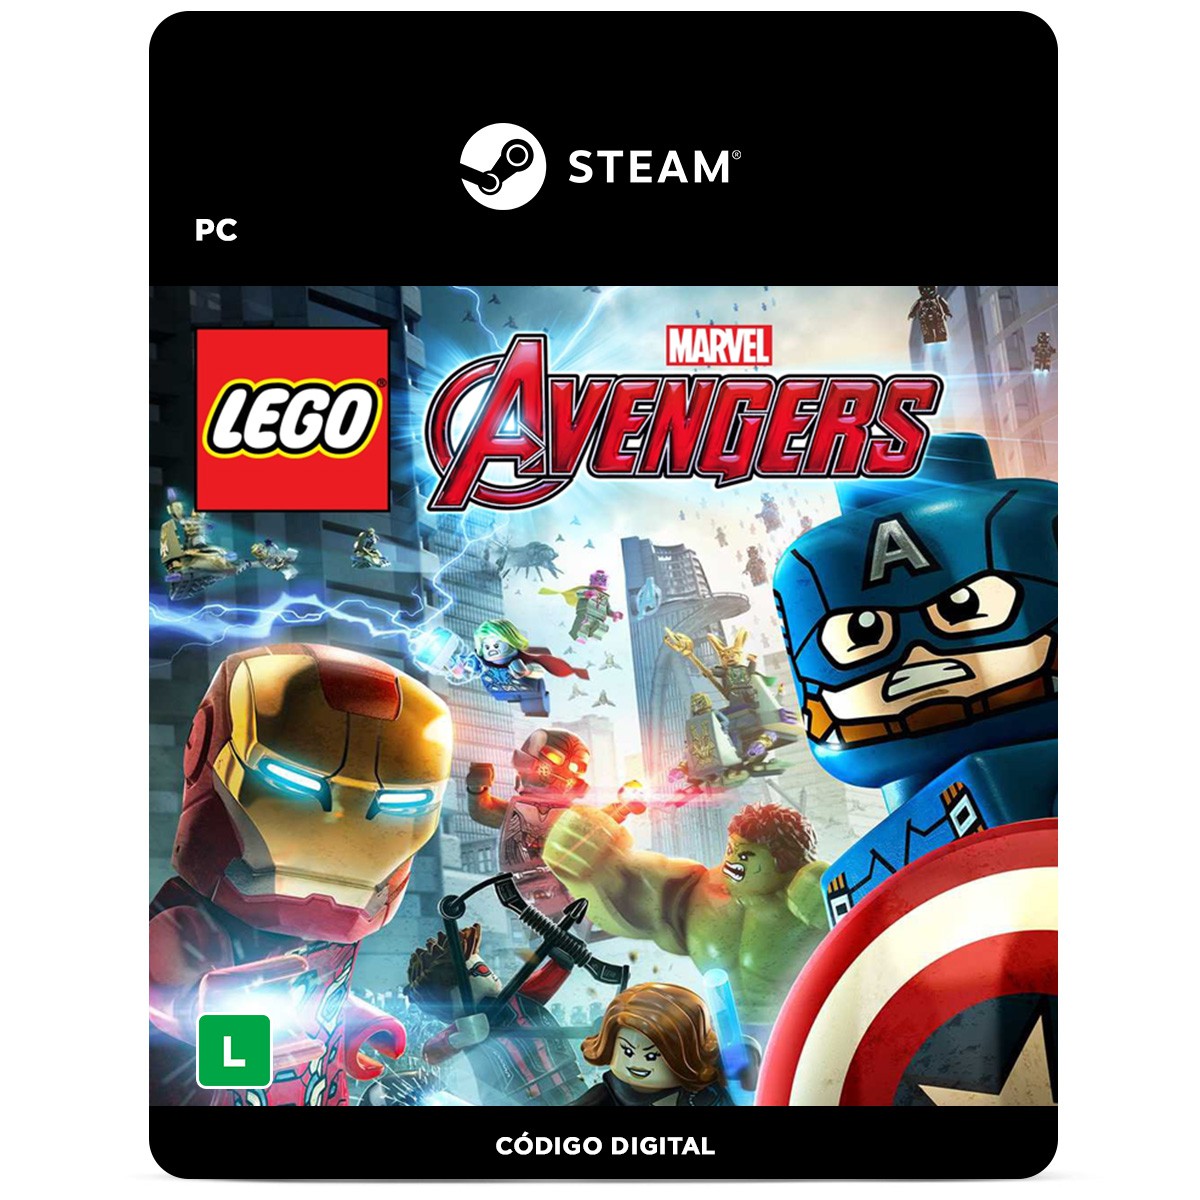 LEGO Marvel's Avengers - PC Código Digital - PentaKill Store - PentaKill  Store - Gift Card e Games